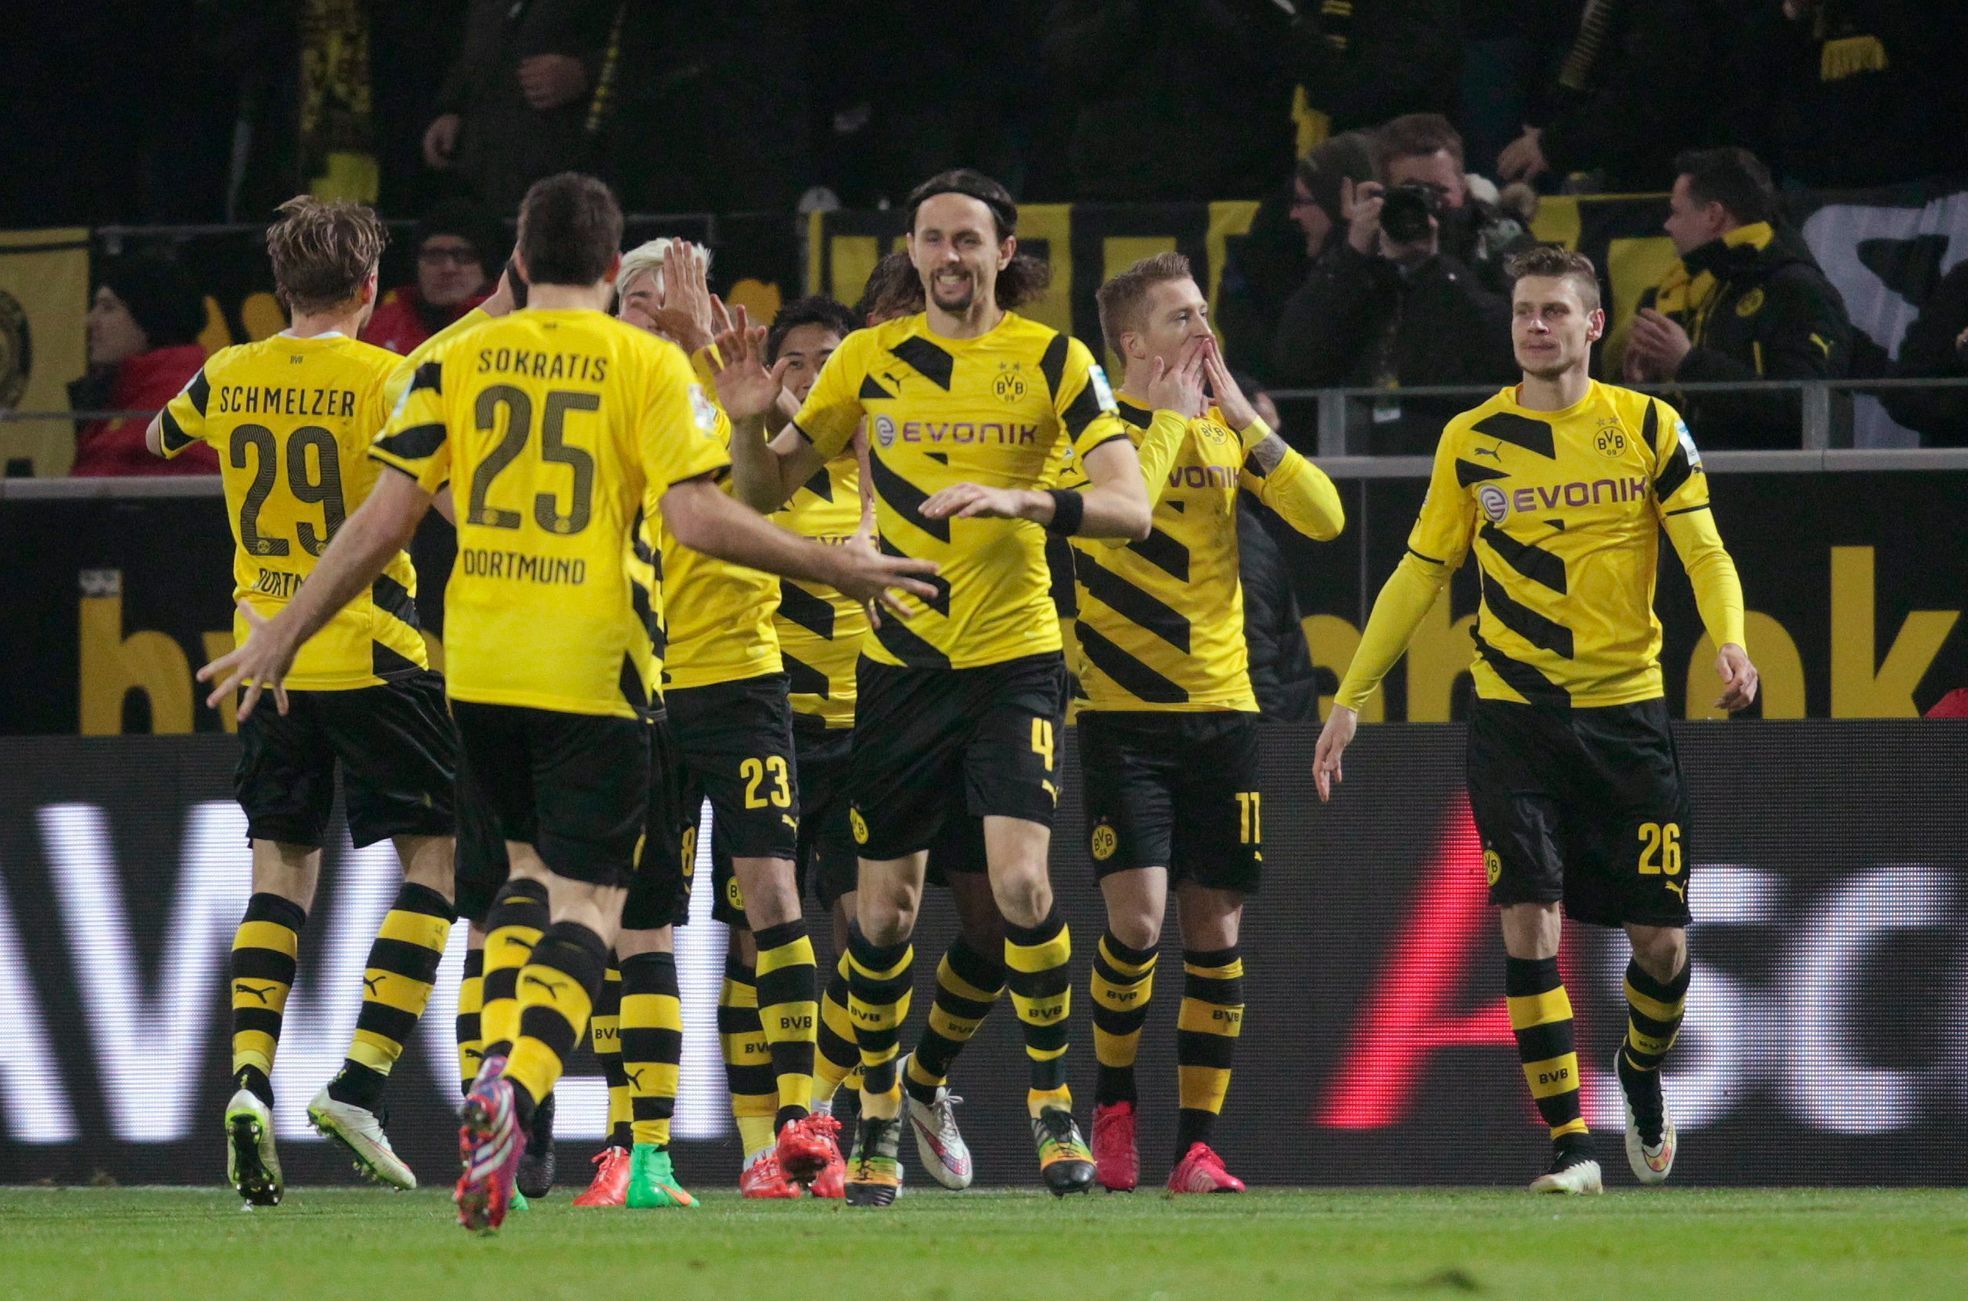 Borussia Dortmund's players celebrate a goal against Mainz 05 during their Bundesliga first division soccer match in Dortmund